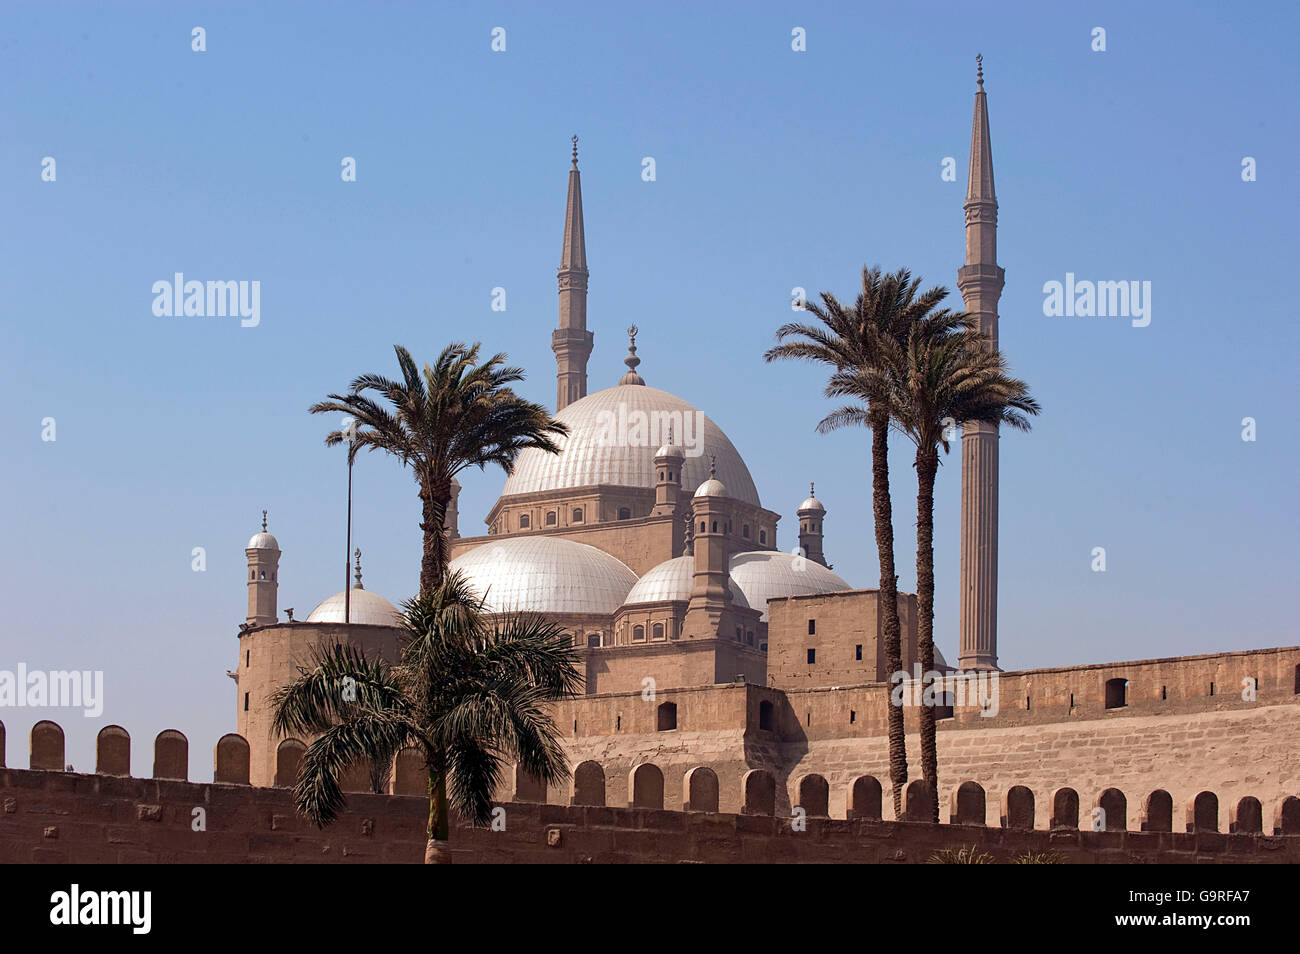 La gran mezquita de Muhammad Ali Pasha, dos minaretes, estilo otomano, estilo persa, edificio abovedado, Cairo, Egipto / Mezquita de Alabastro Foto de stock